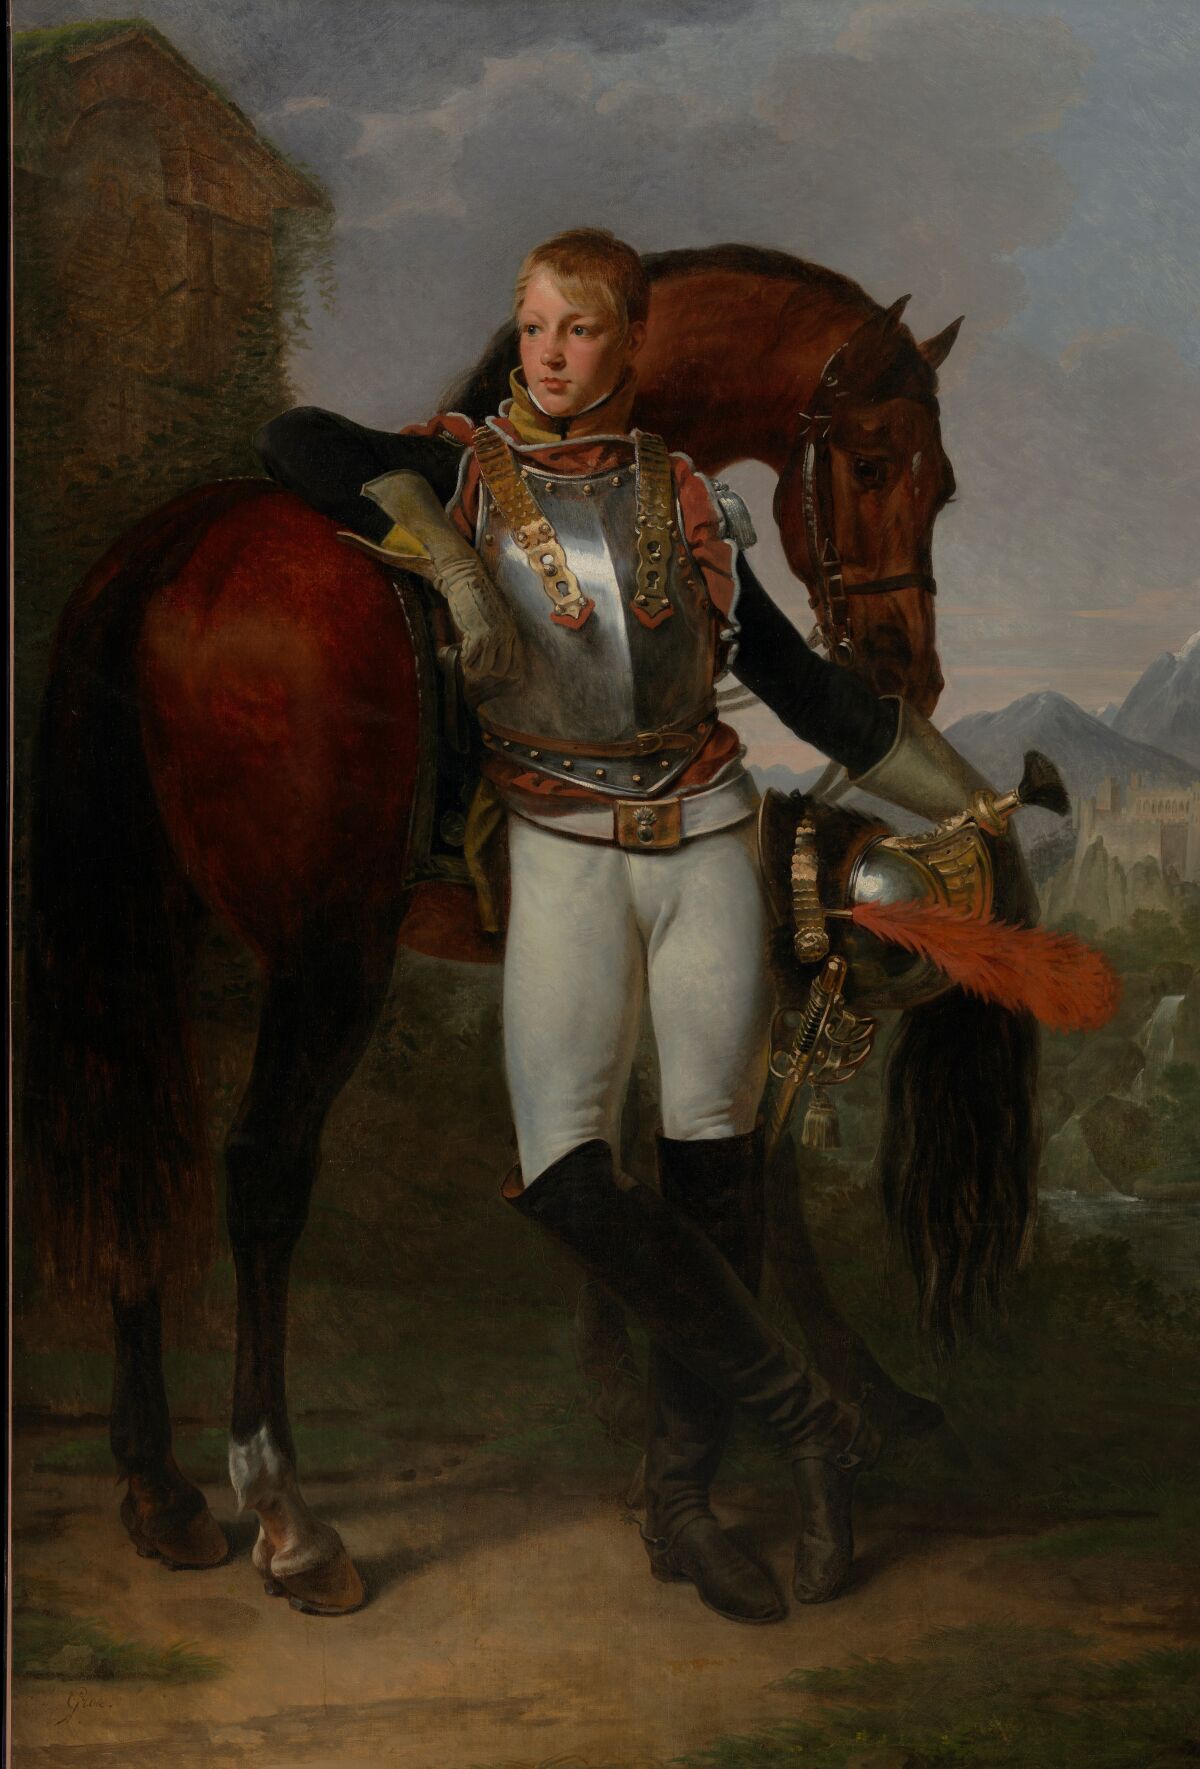 Antoine-Jean Gros, "Portrait of Second Lieutenant Charles Legrand," circa 1810, oil on canvas